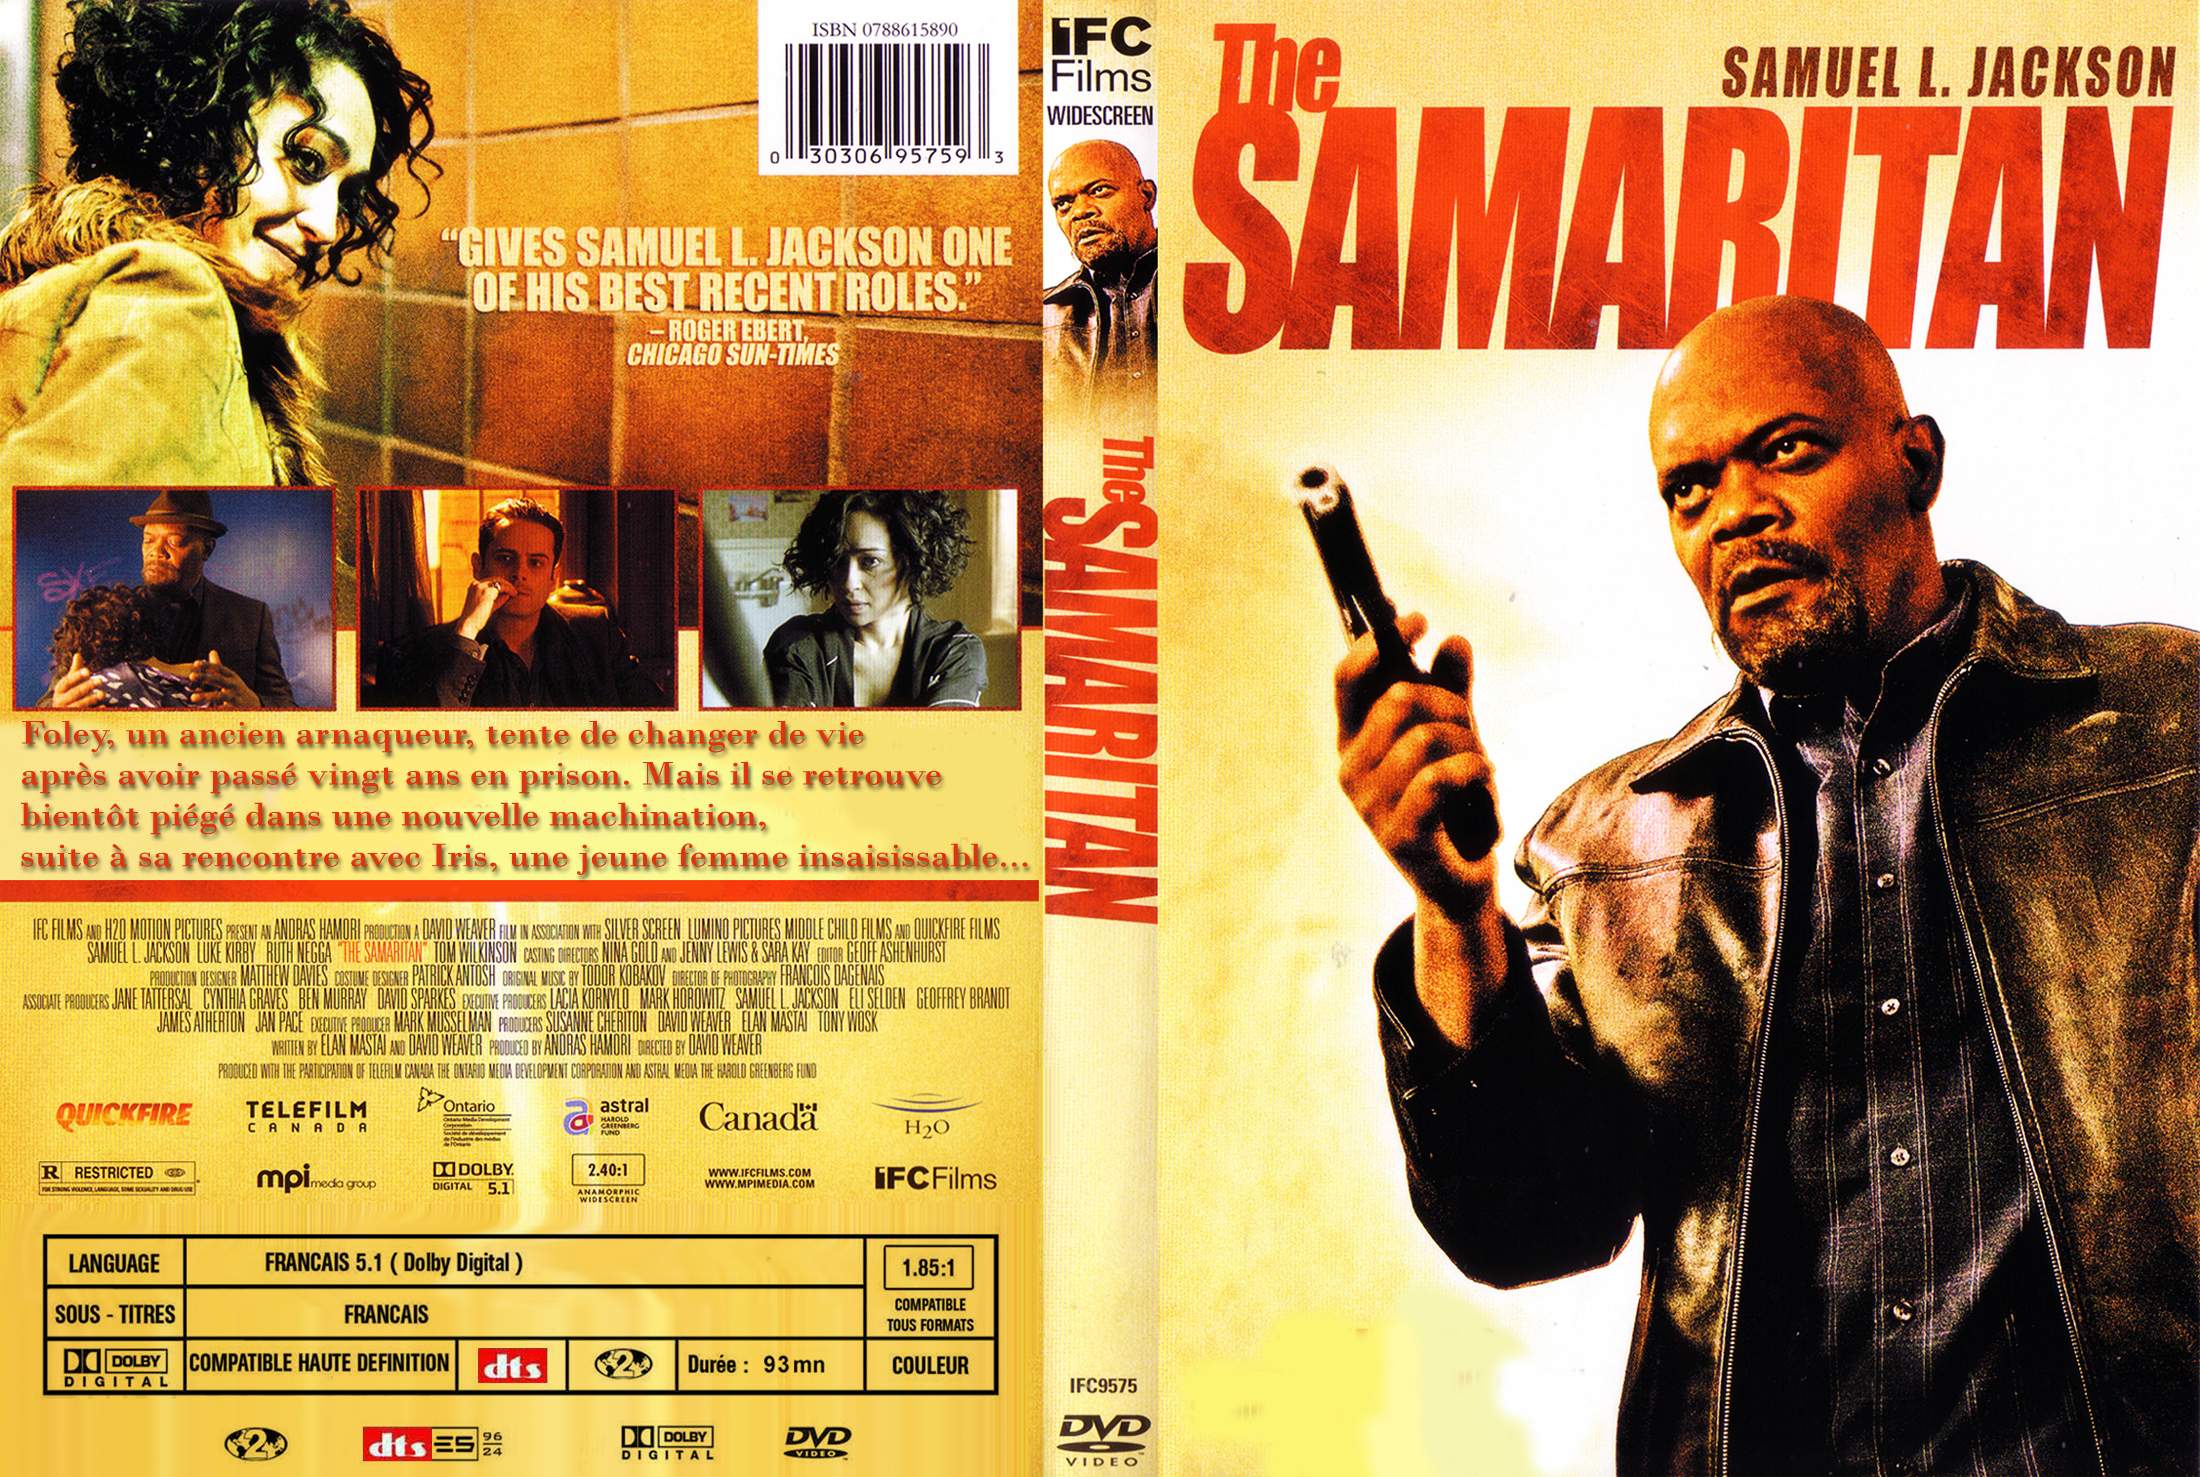 Jaquette DVD The Samaritan custom